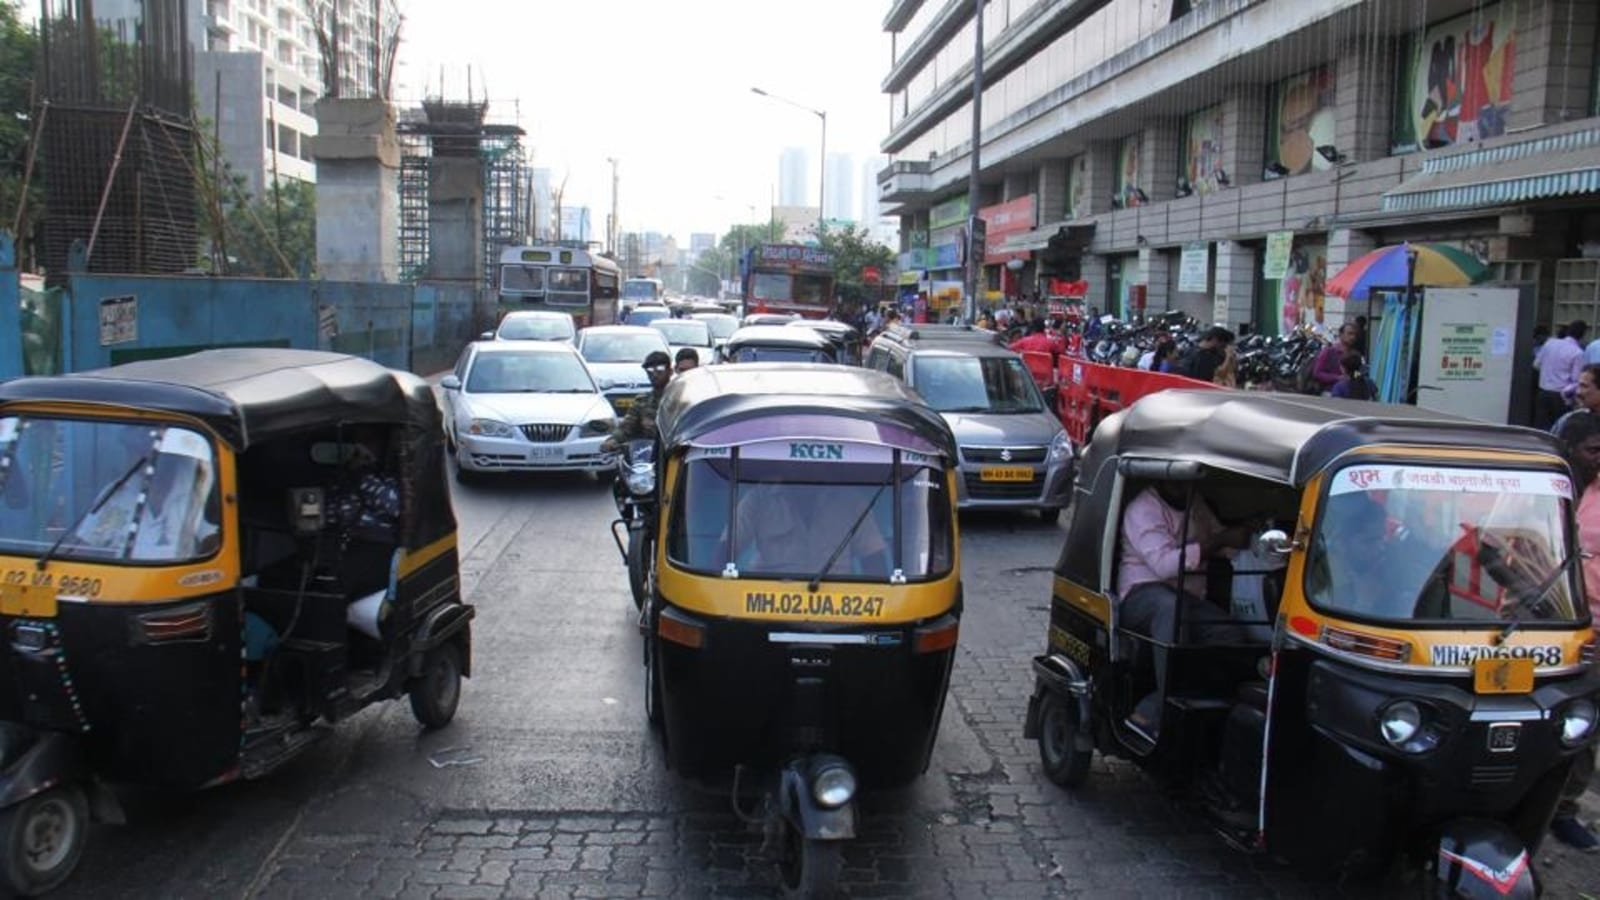 Mumbai Local Taxi Fare Chart